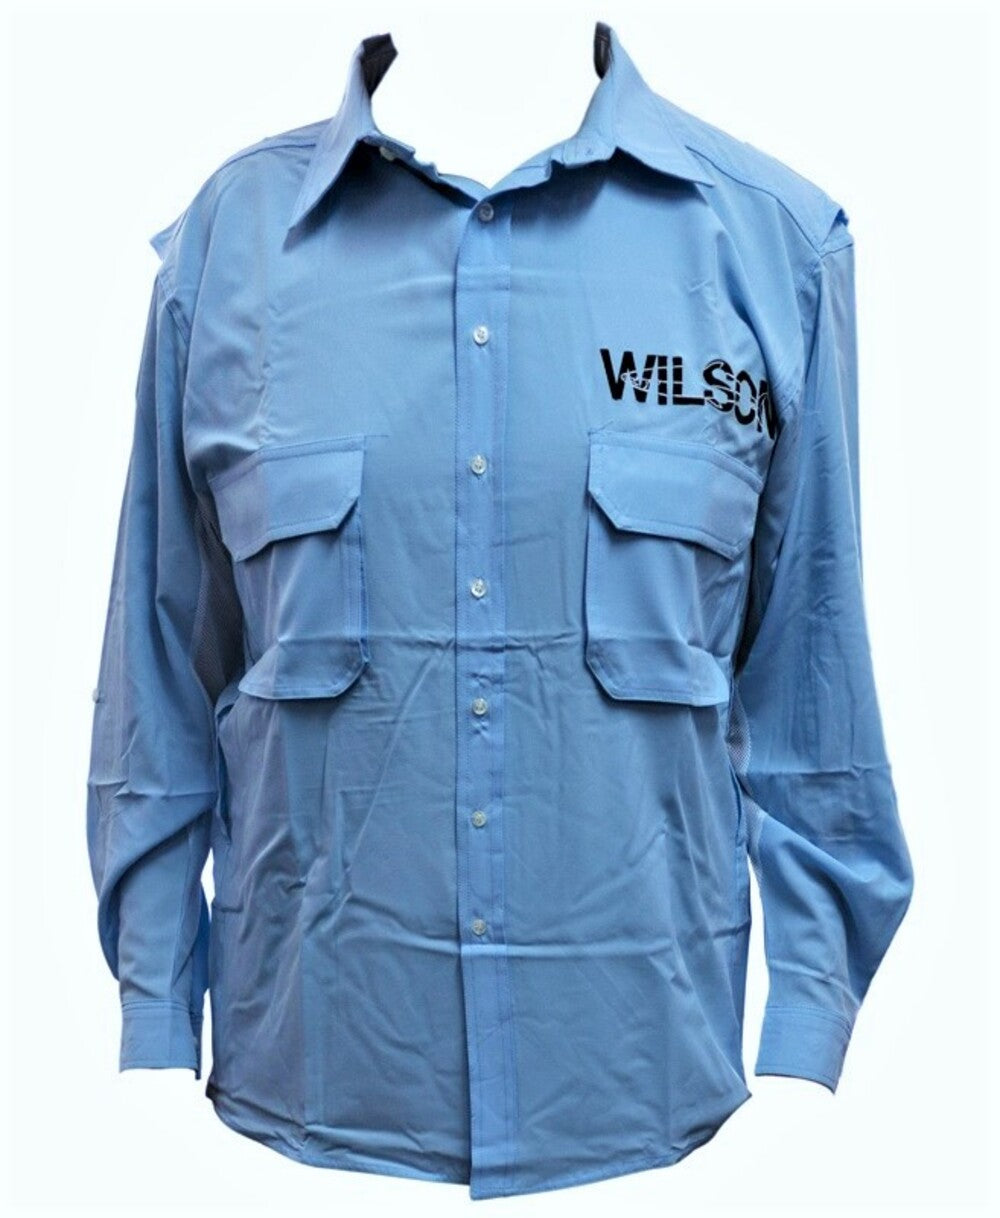 Wilson Outdoors Long Sleeve Fishing Shirt - Blue